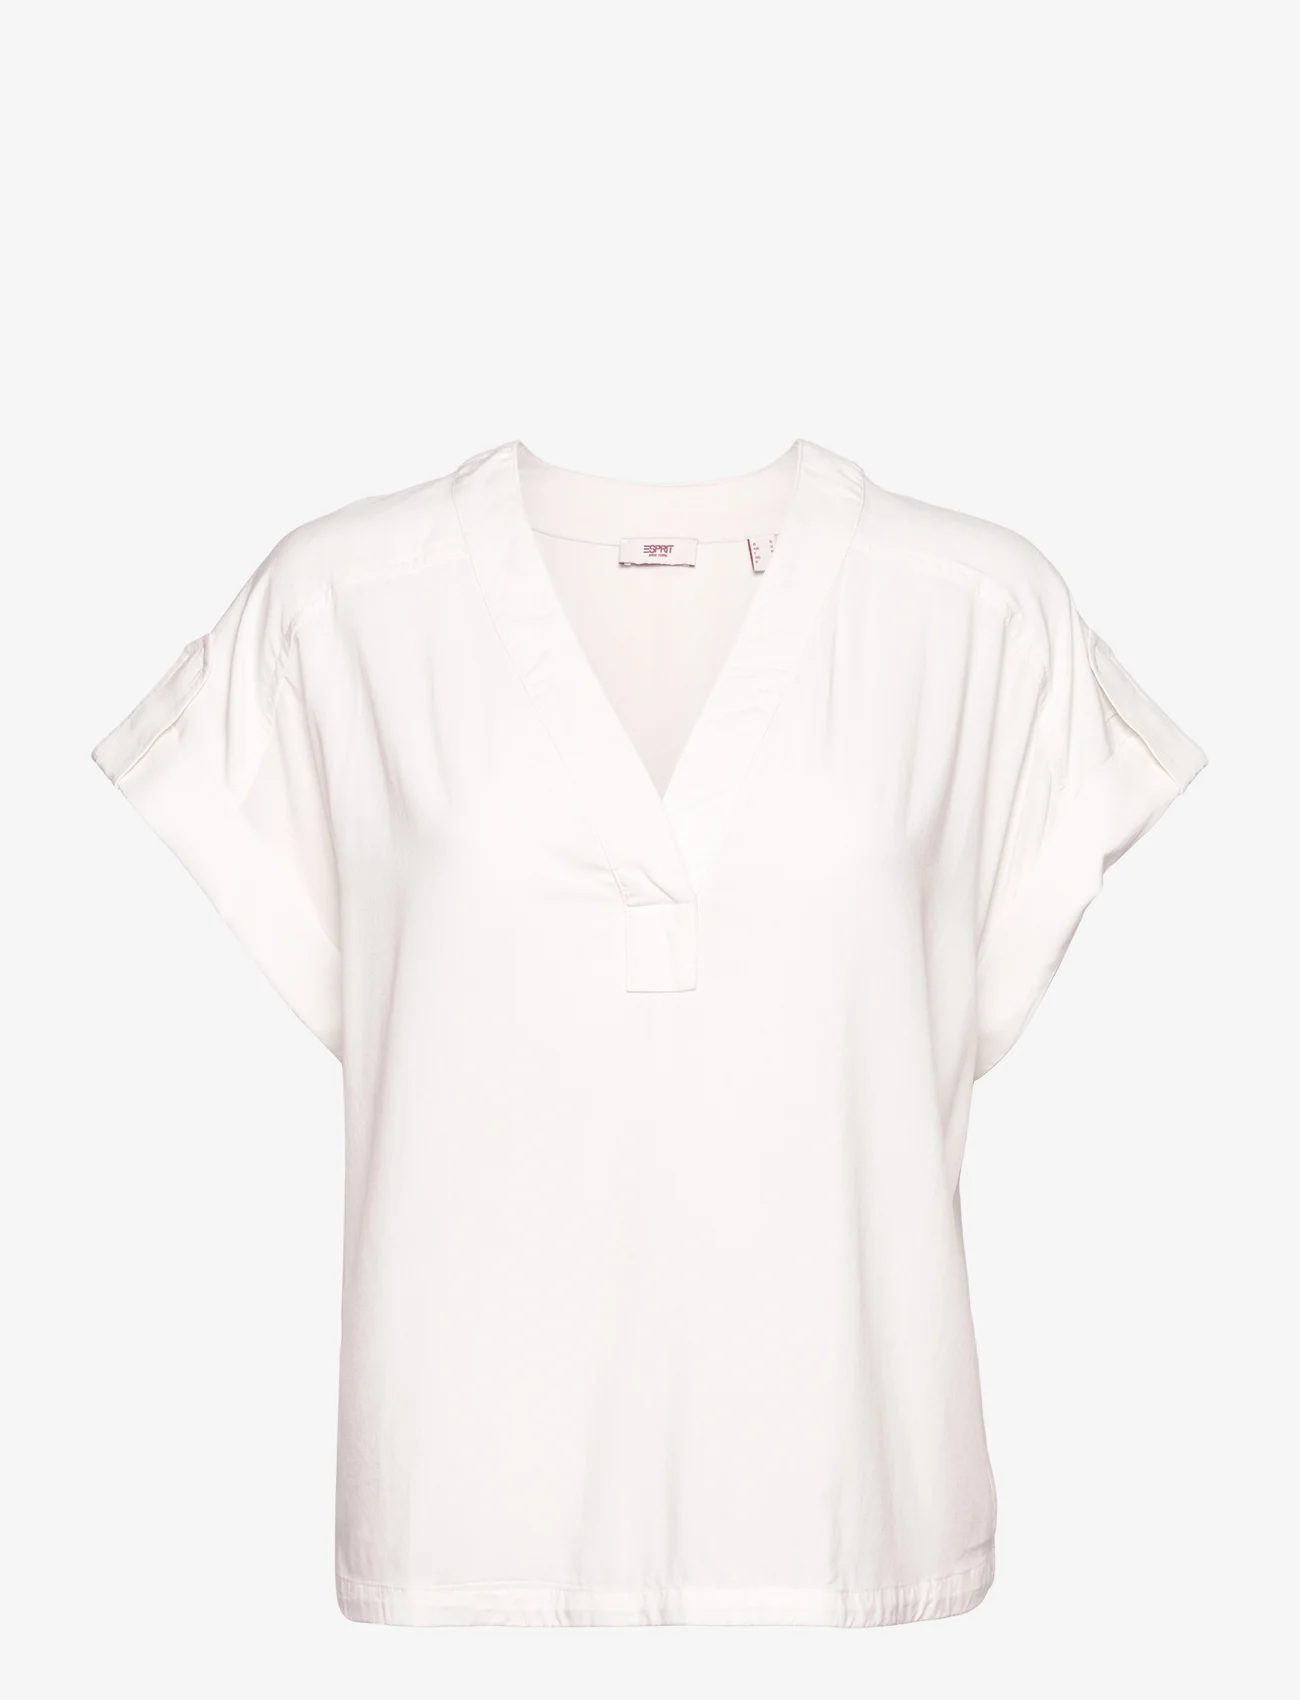 Esprit Casual - Blouses woven - kurzämlige blusen - off white - 0